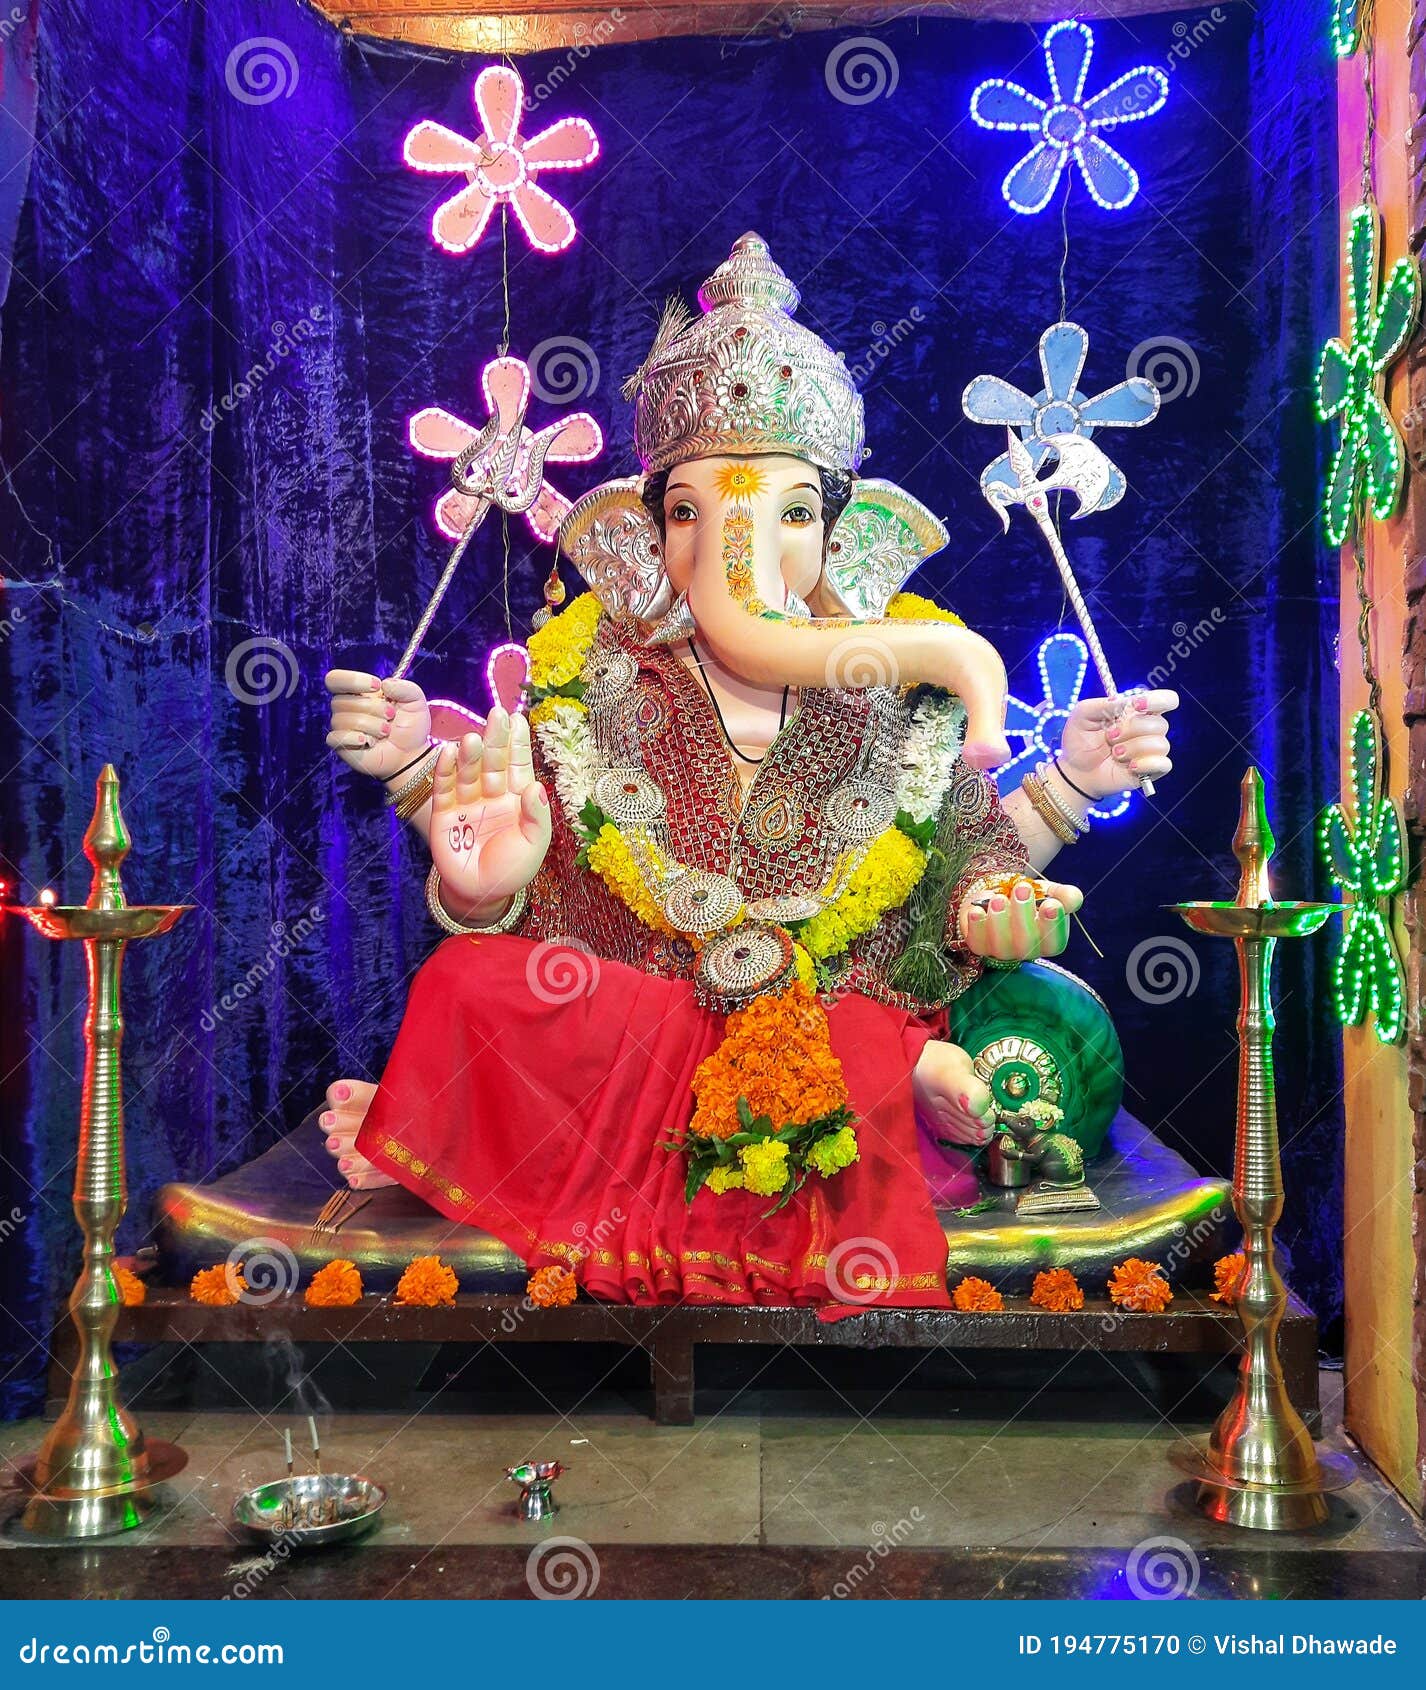 The Beautiful Sculpture of Lord Idol Ganesha Ganeshafestival2020 Pune ...